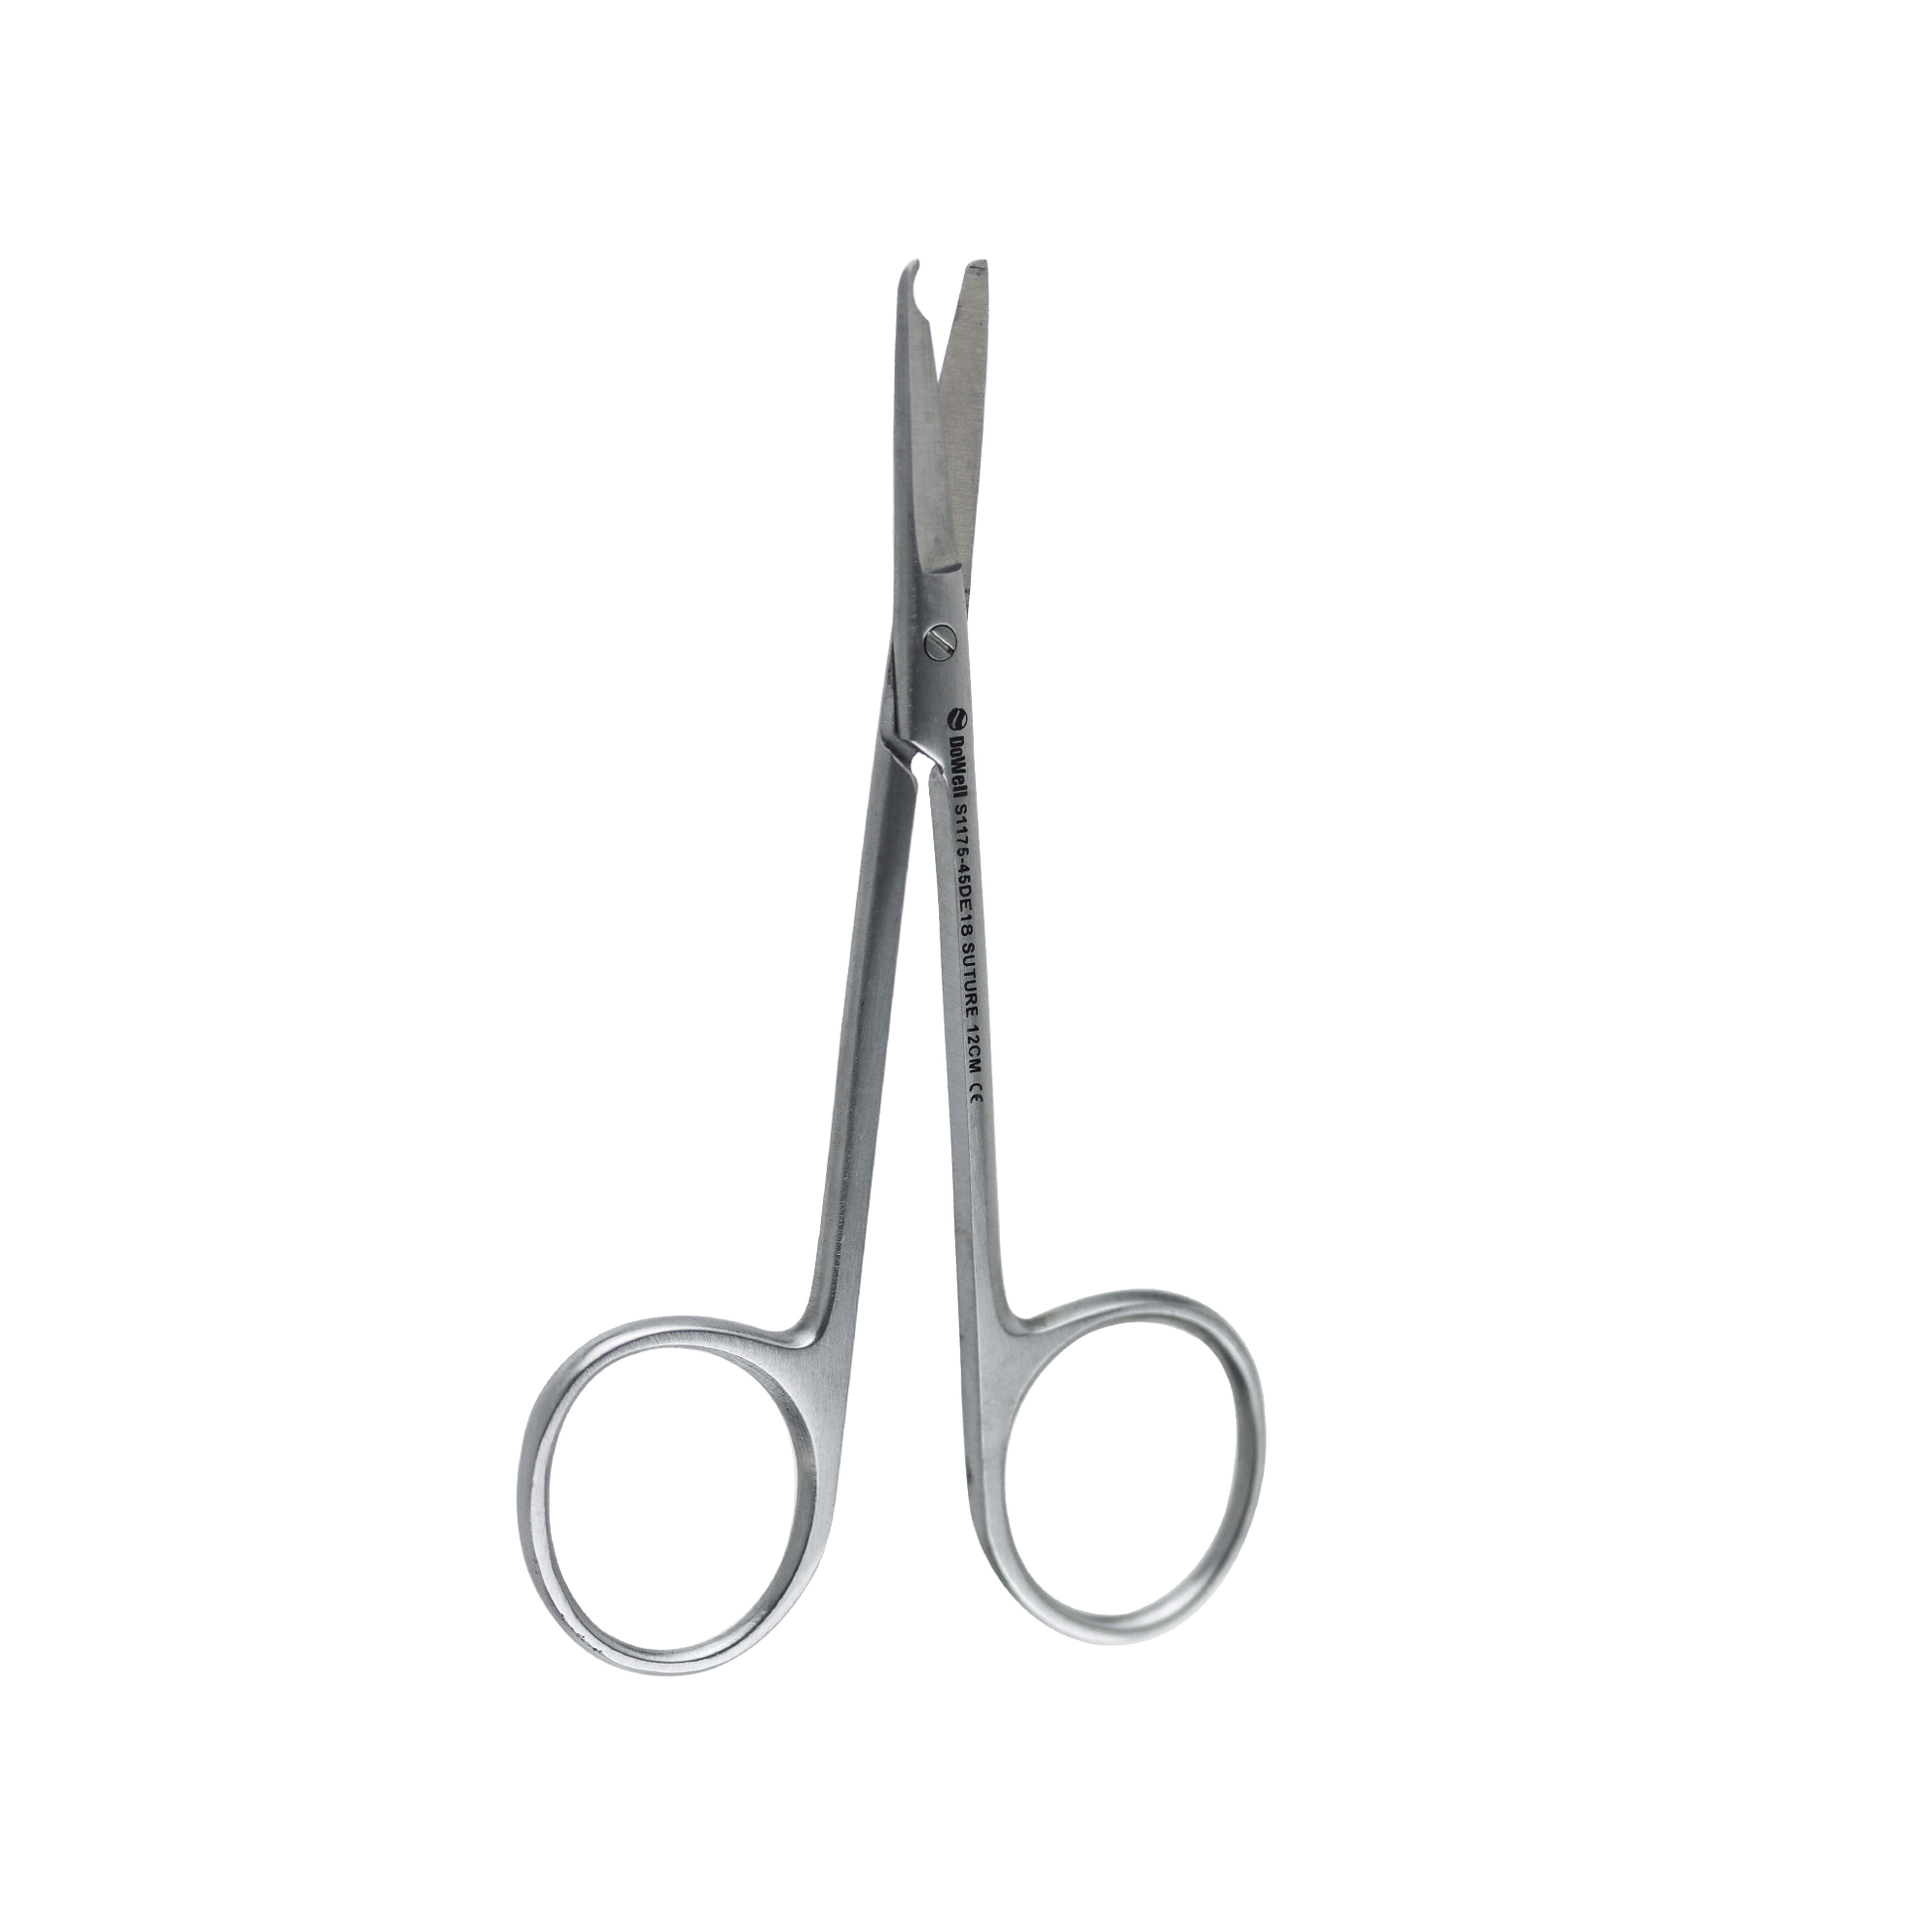 Surgical Suture Scissors-Short Suture Scissor 12Cm Hooked end to lift suture